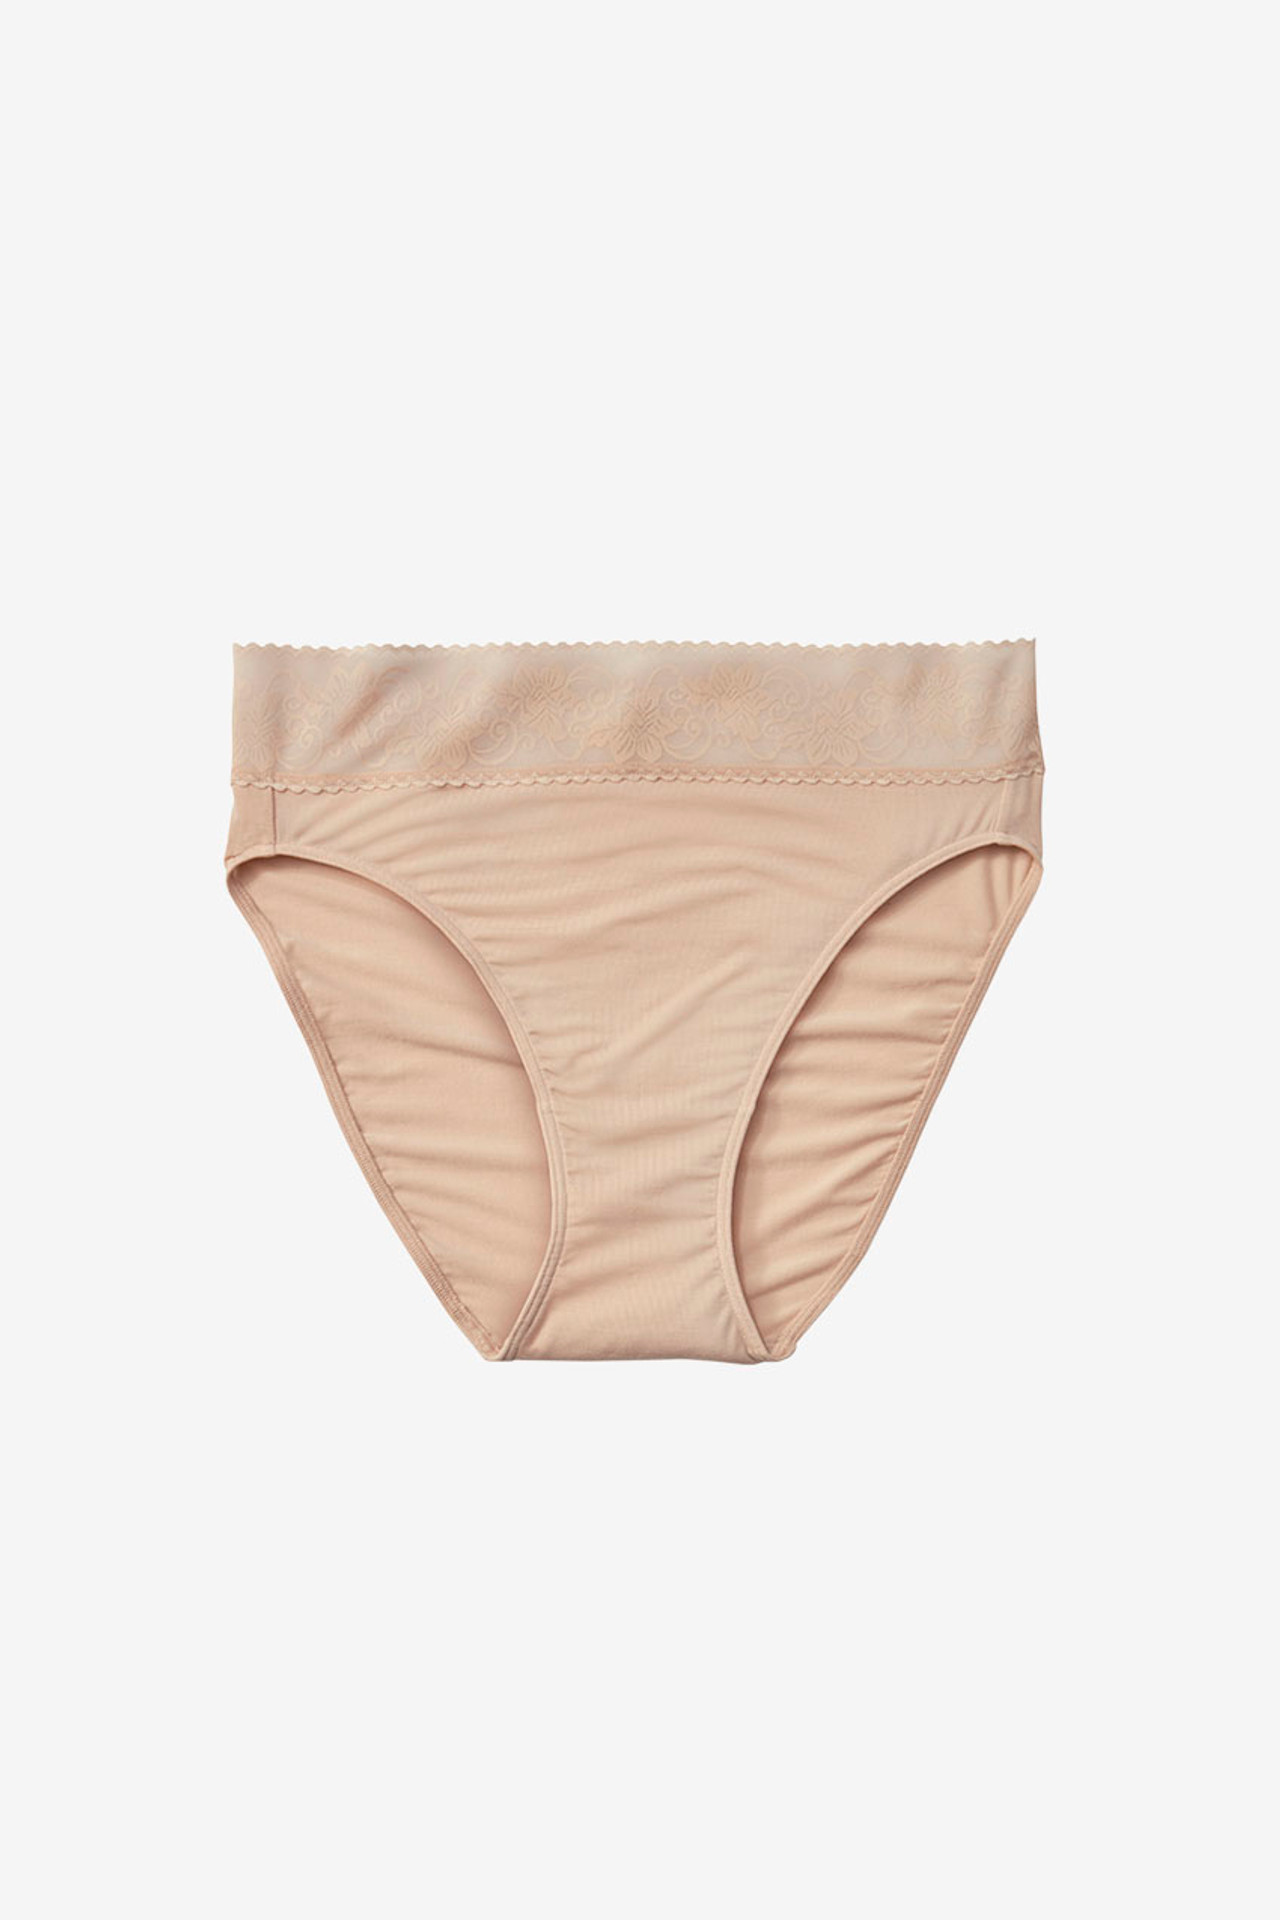 Wacoal Womens Flawless Comfort Thong Panty